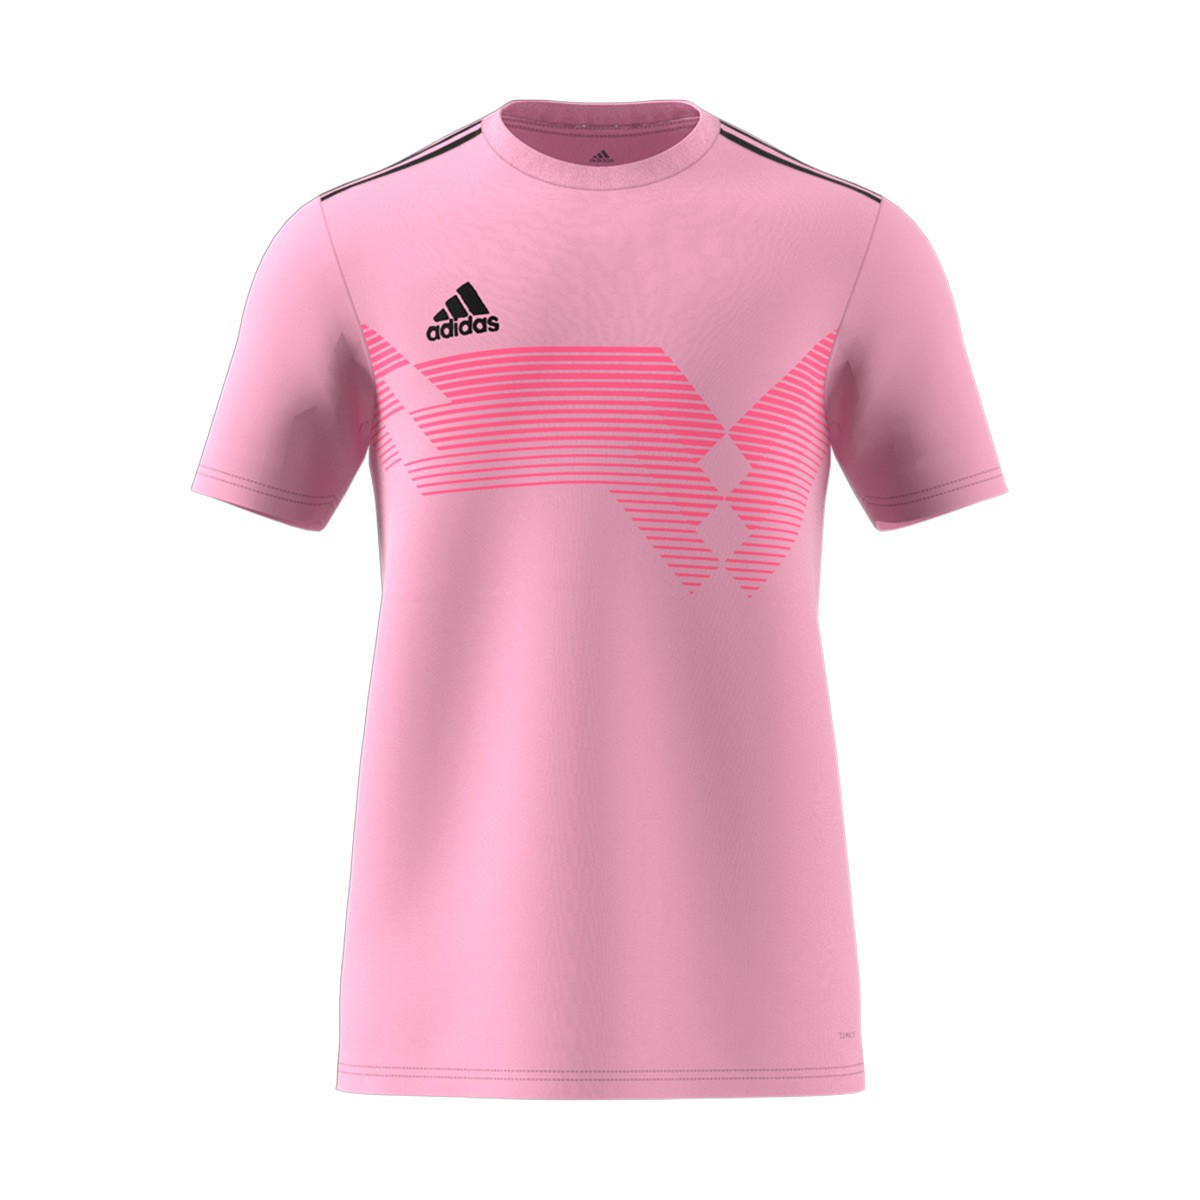 adidas campeon 19 jersey pink